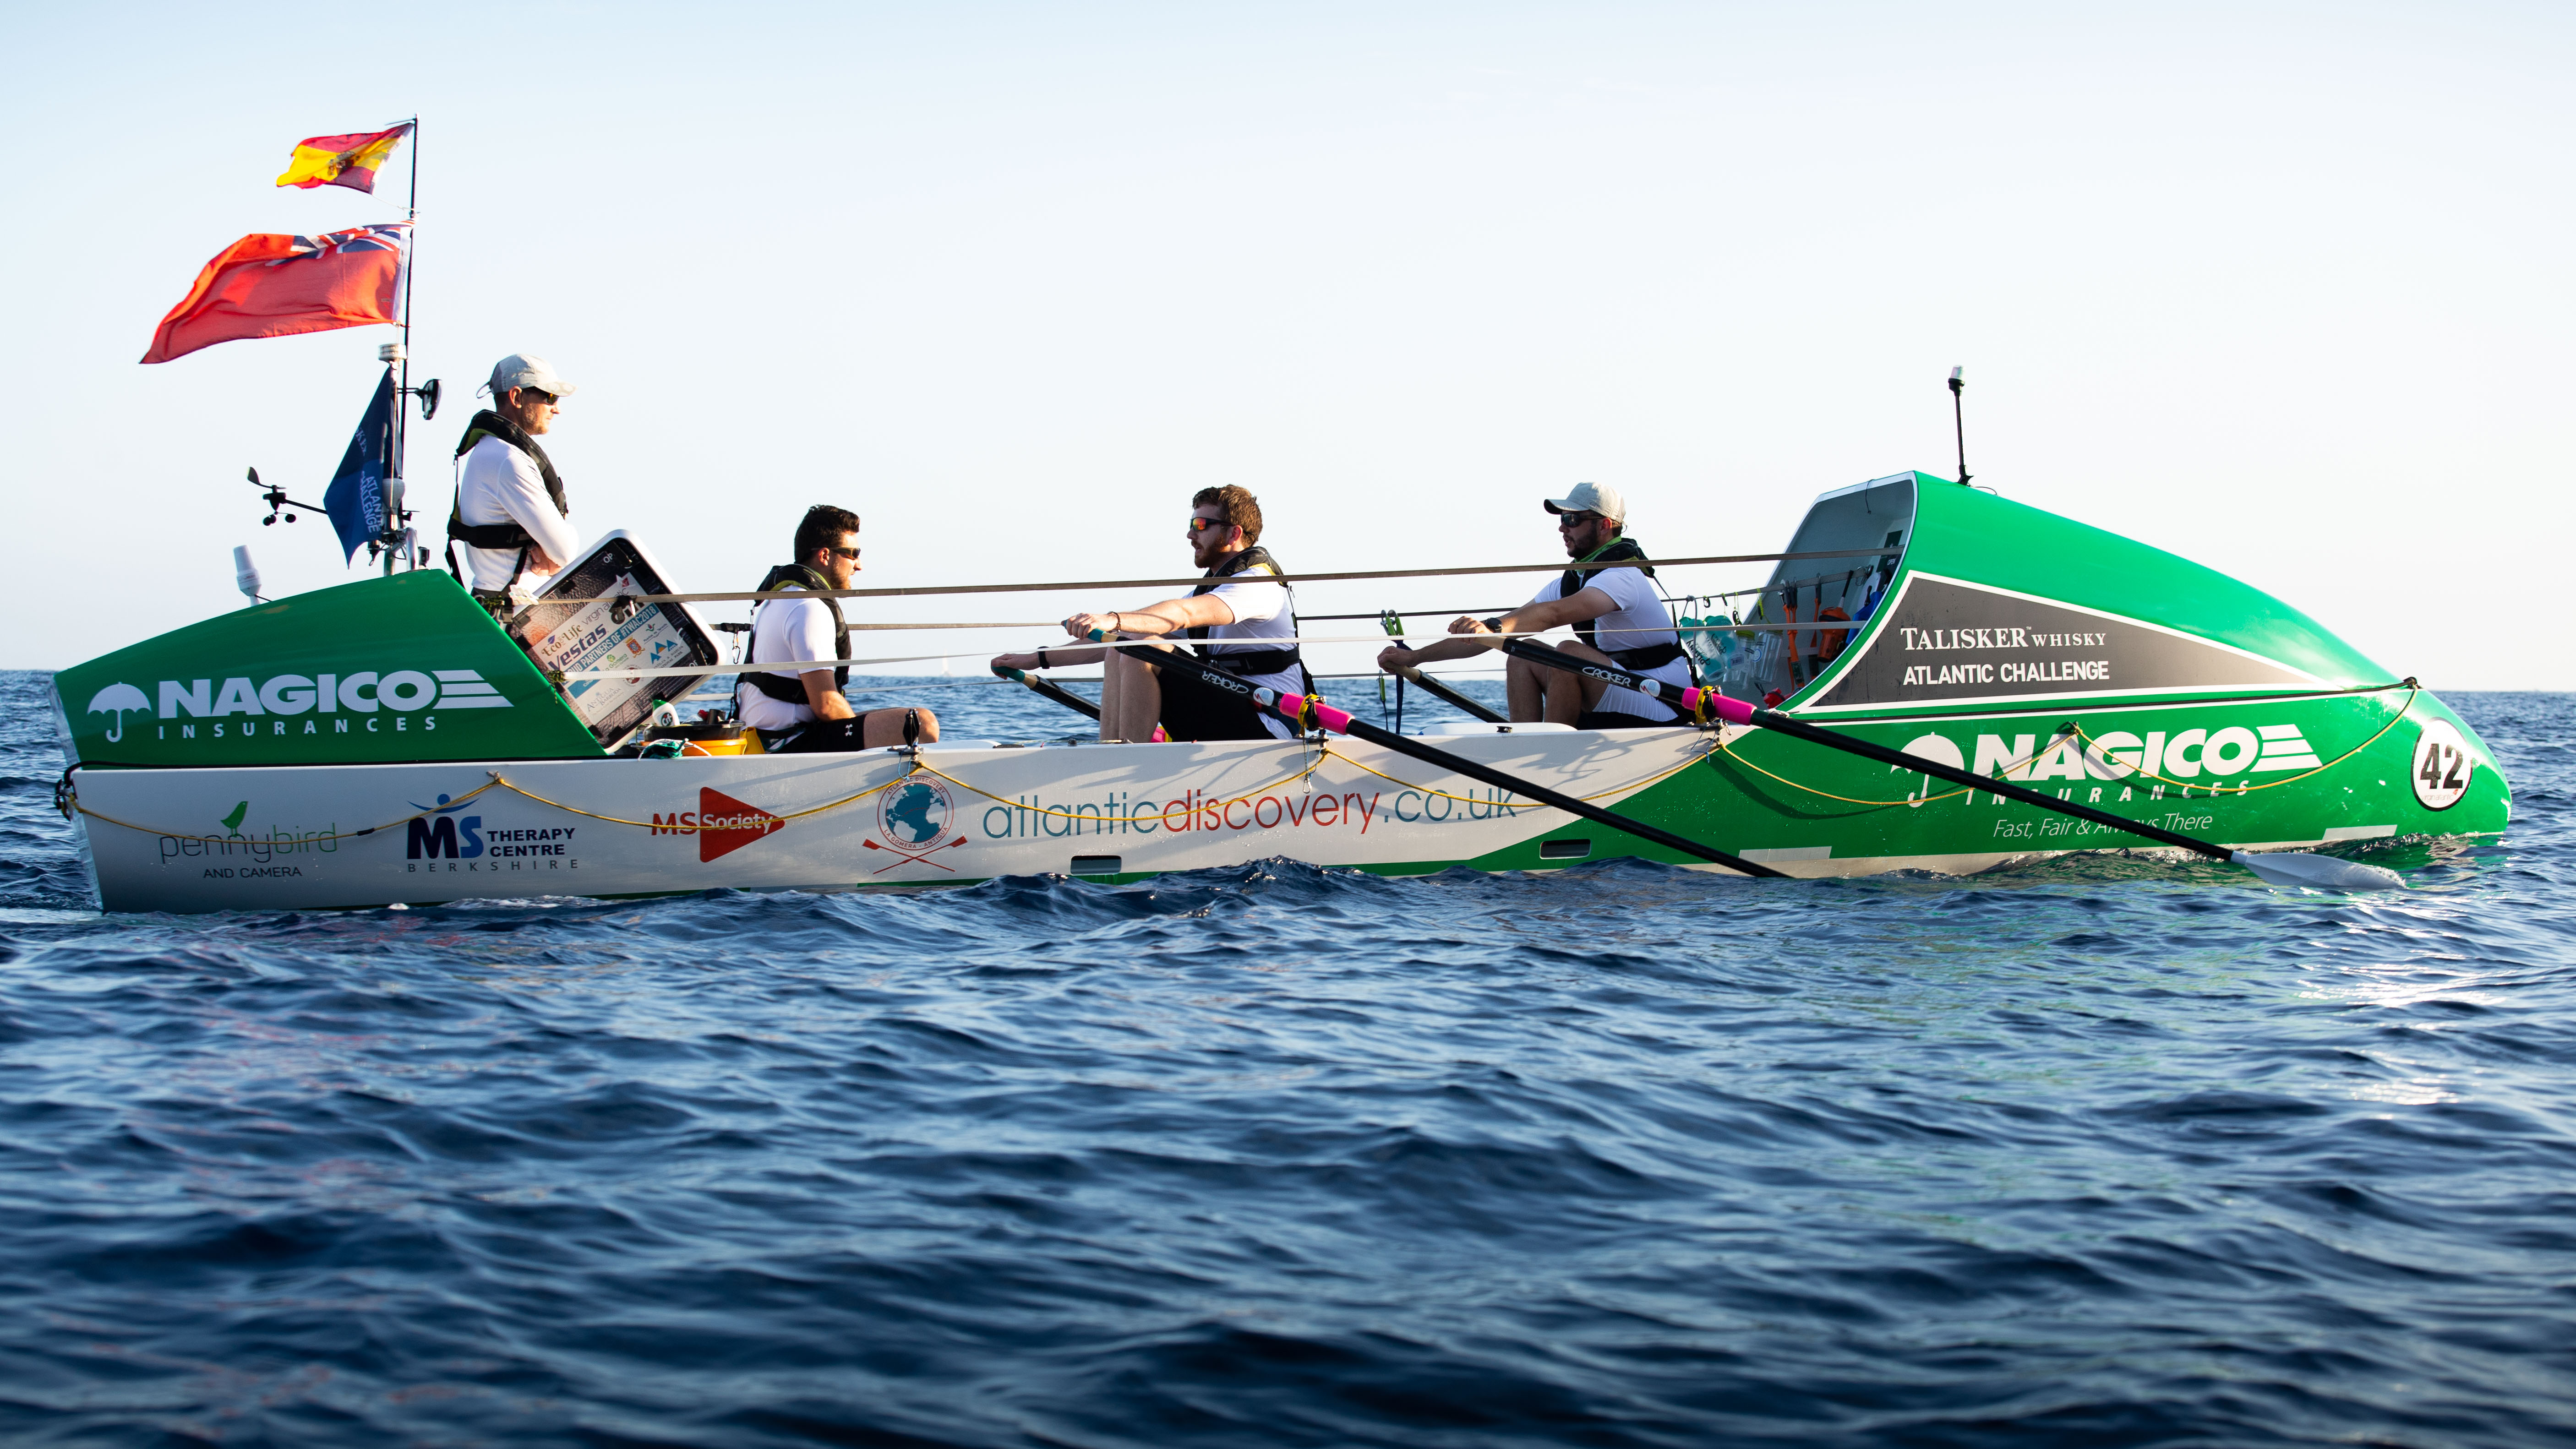 Atlantic Discovery Rowing Team sponsored by Nagico